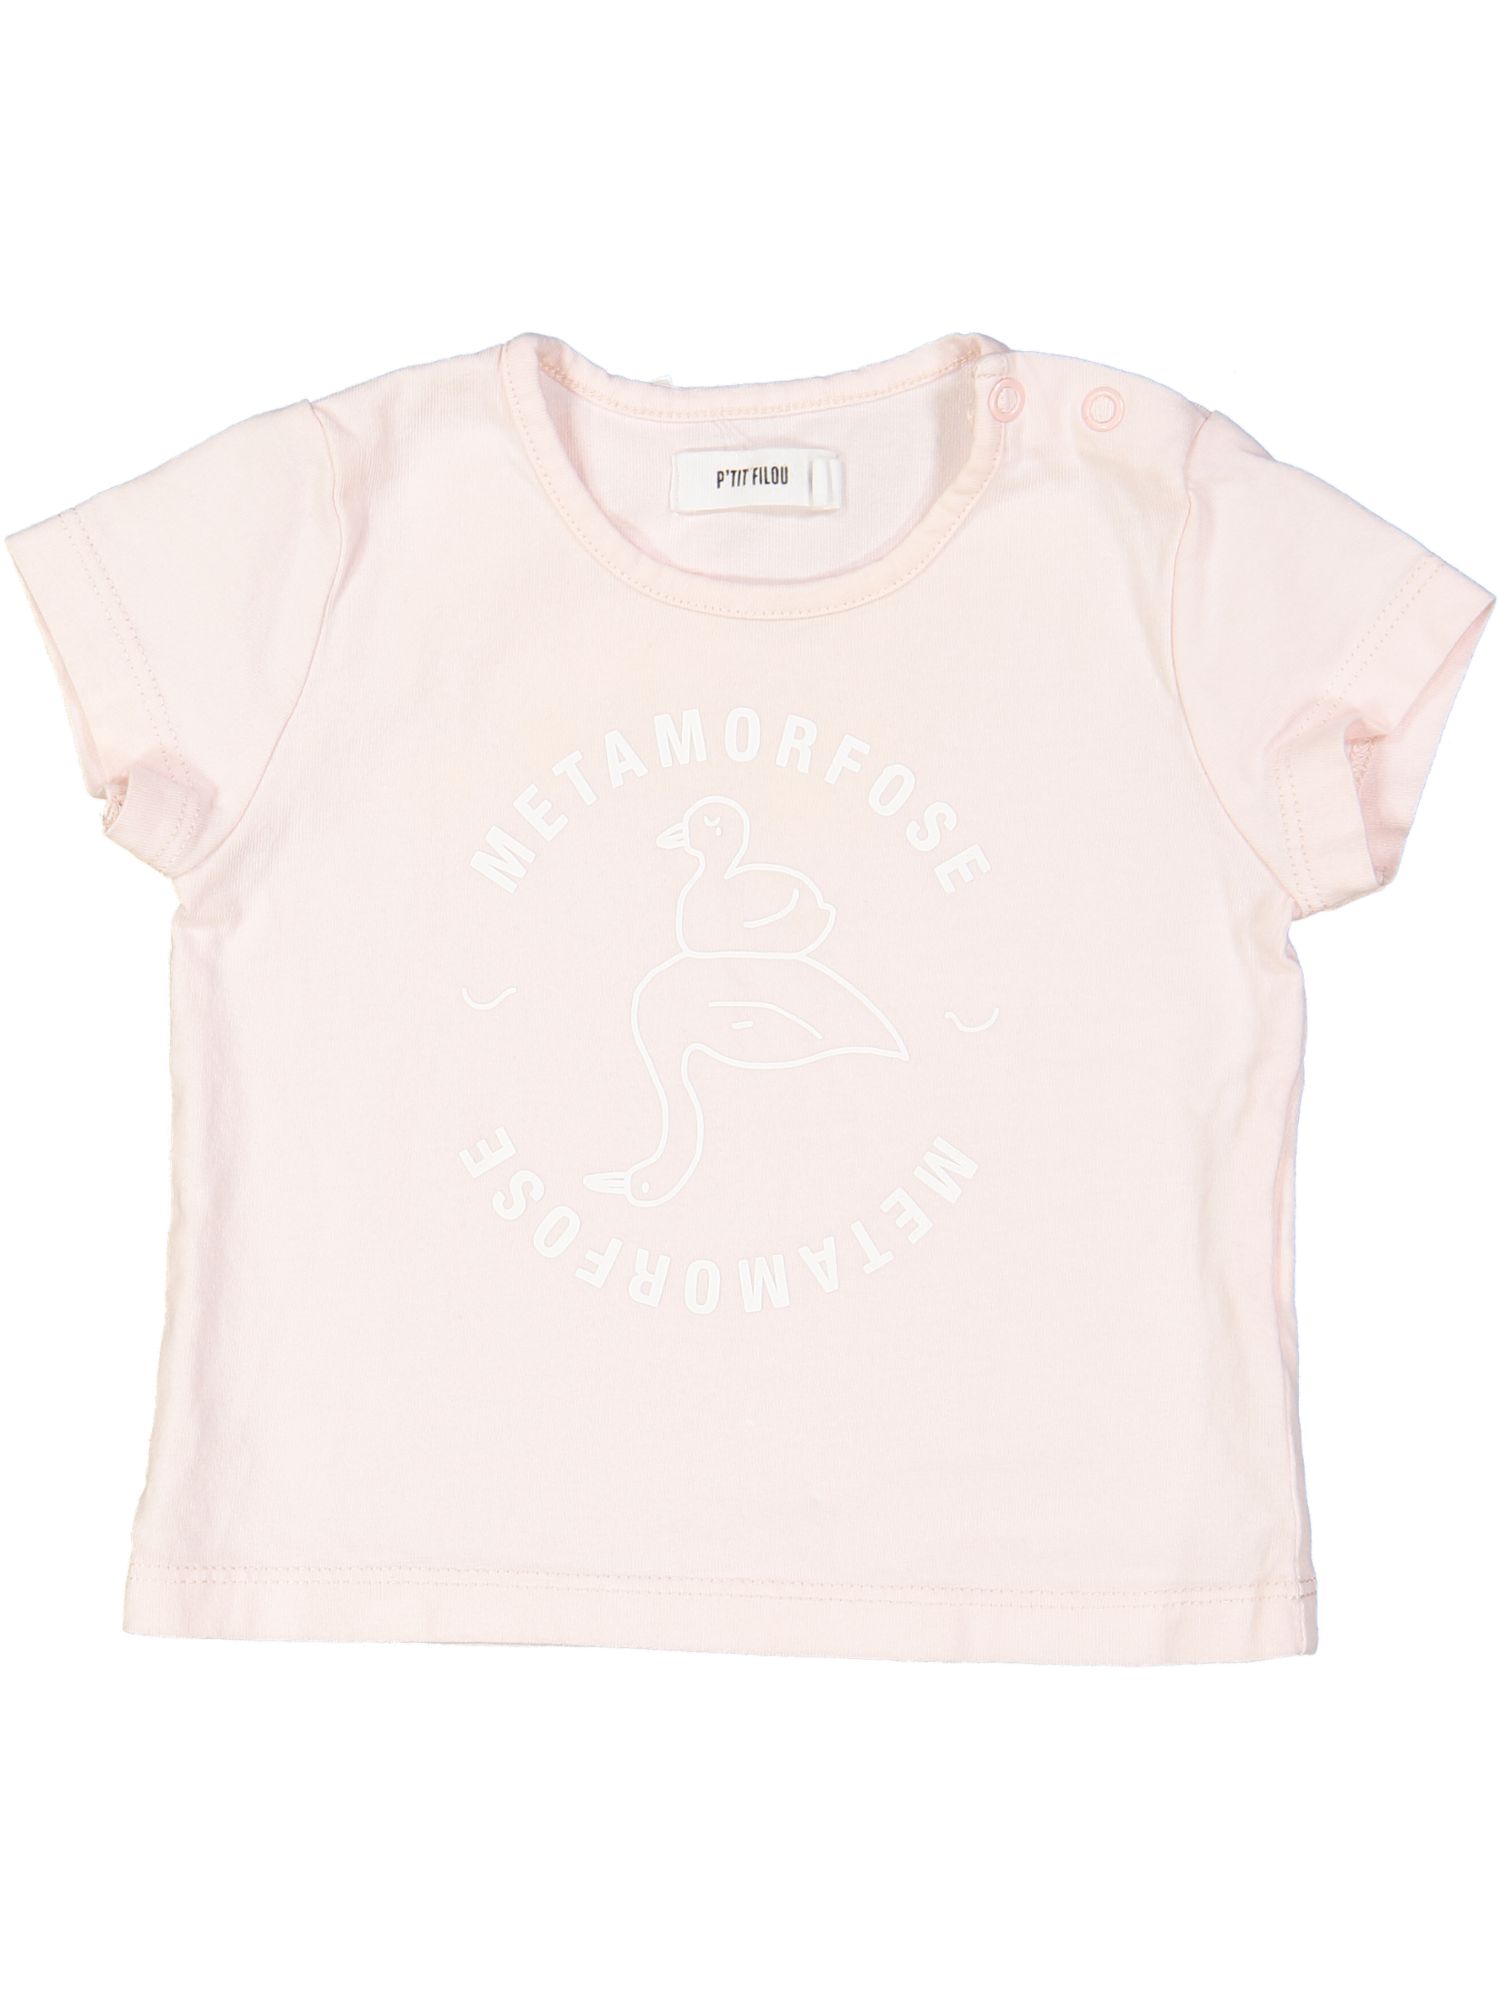 t-shirt roze metamorfose 03m .